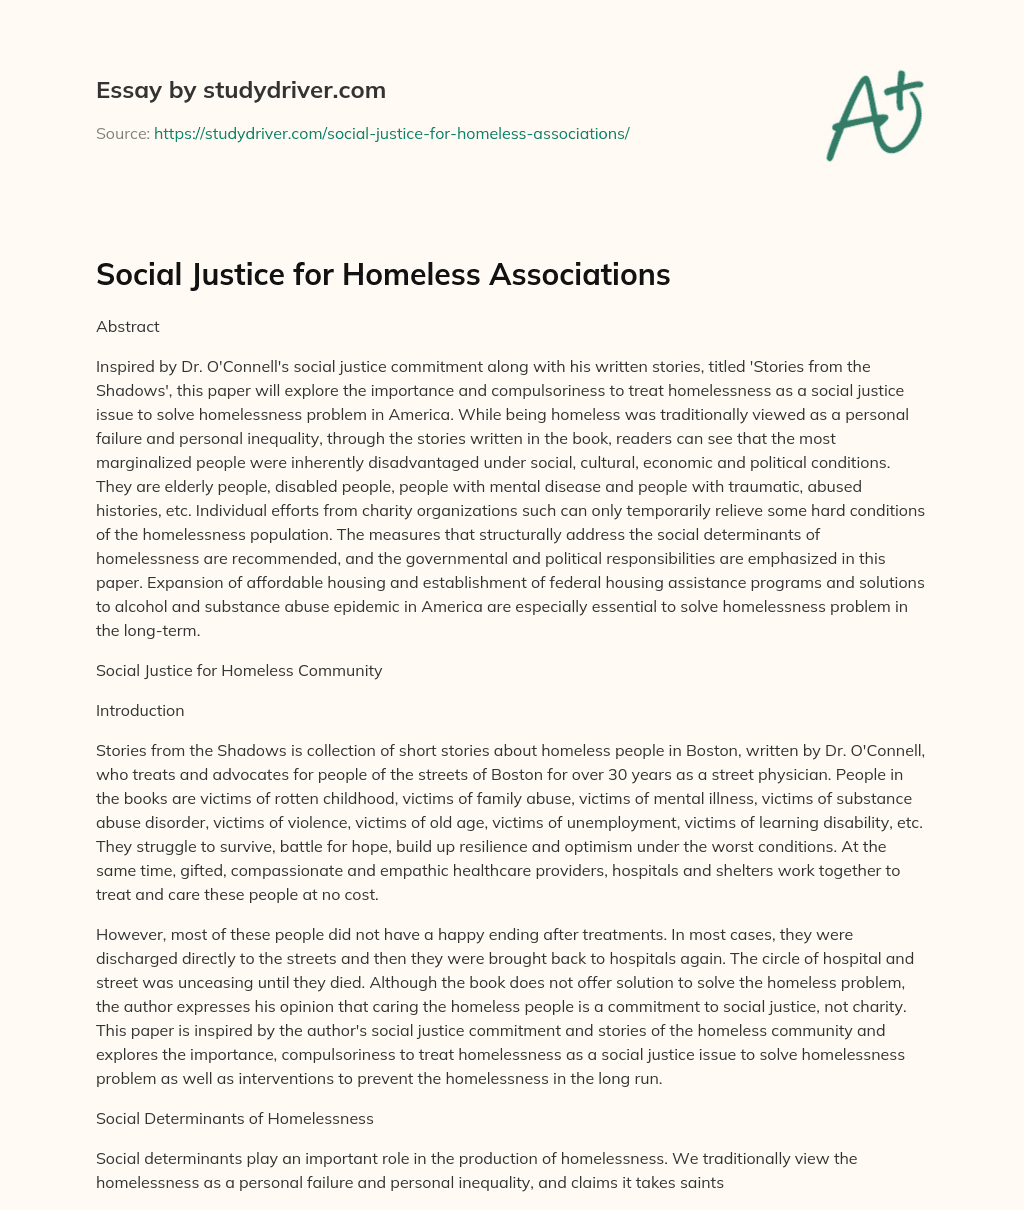 Social Justice for Homeless Associations essay